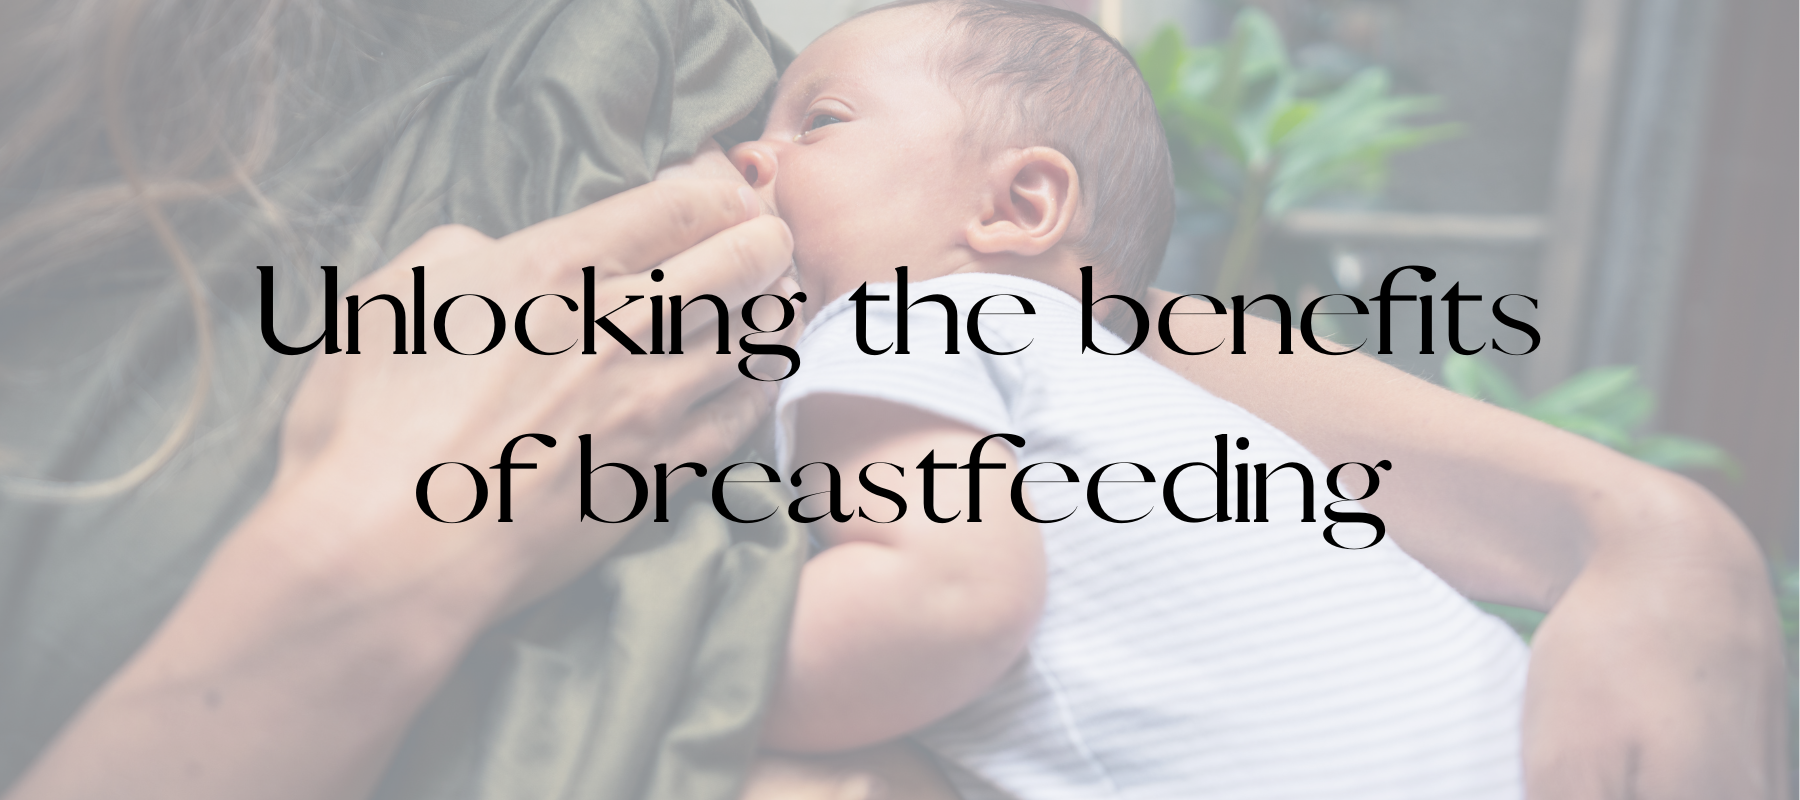 Unlocking the benefits of breastfeeding